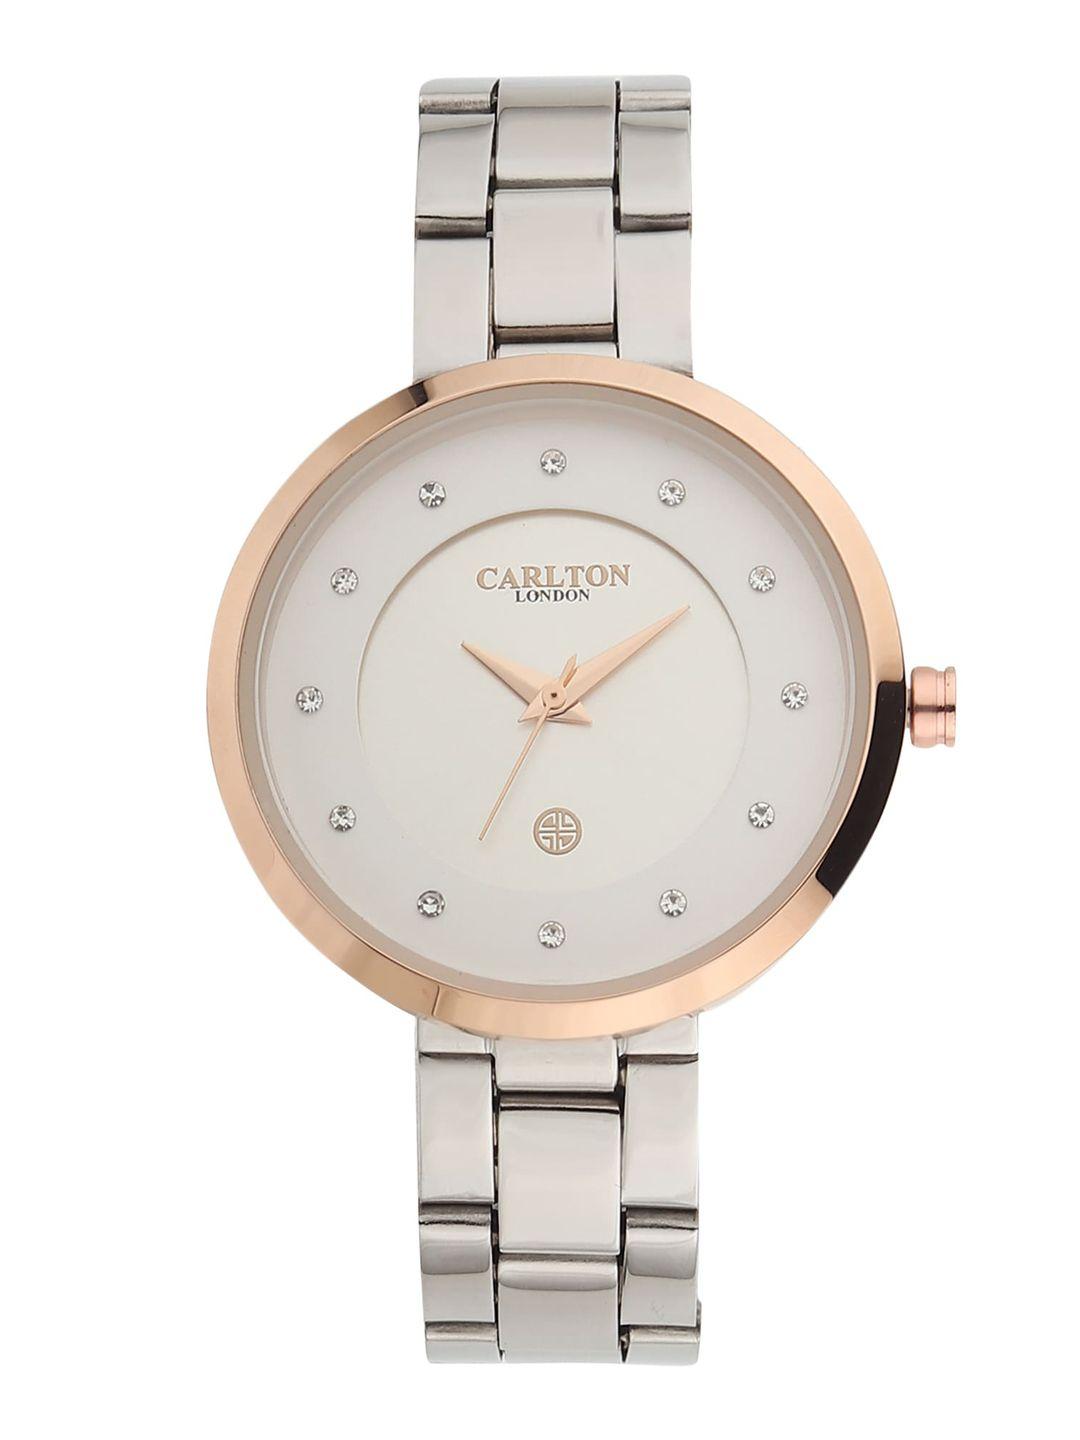 carlton-london-women-silver-toned-&-white-analogue-watch